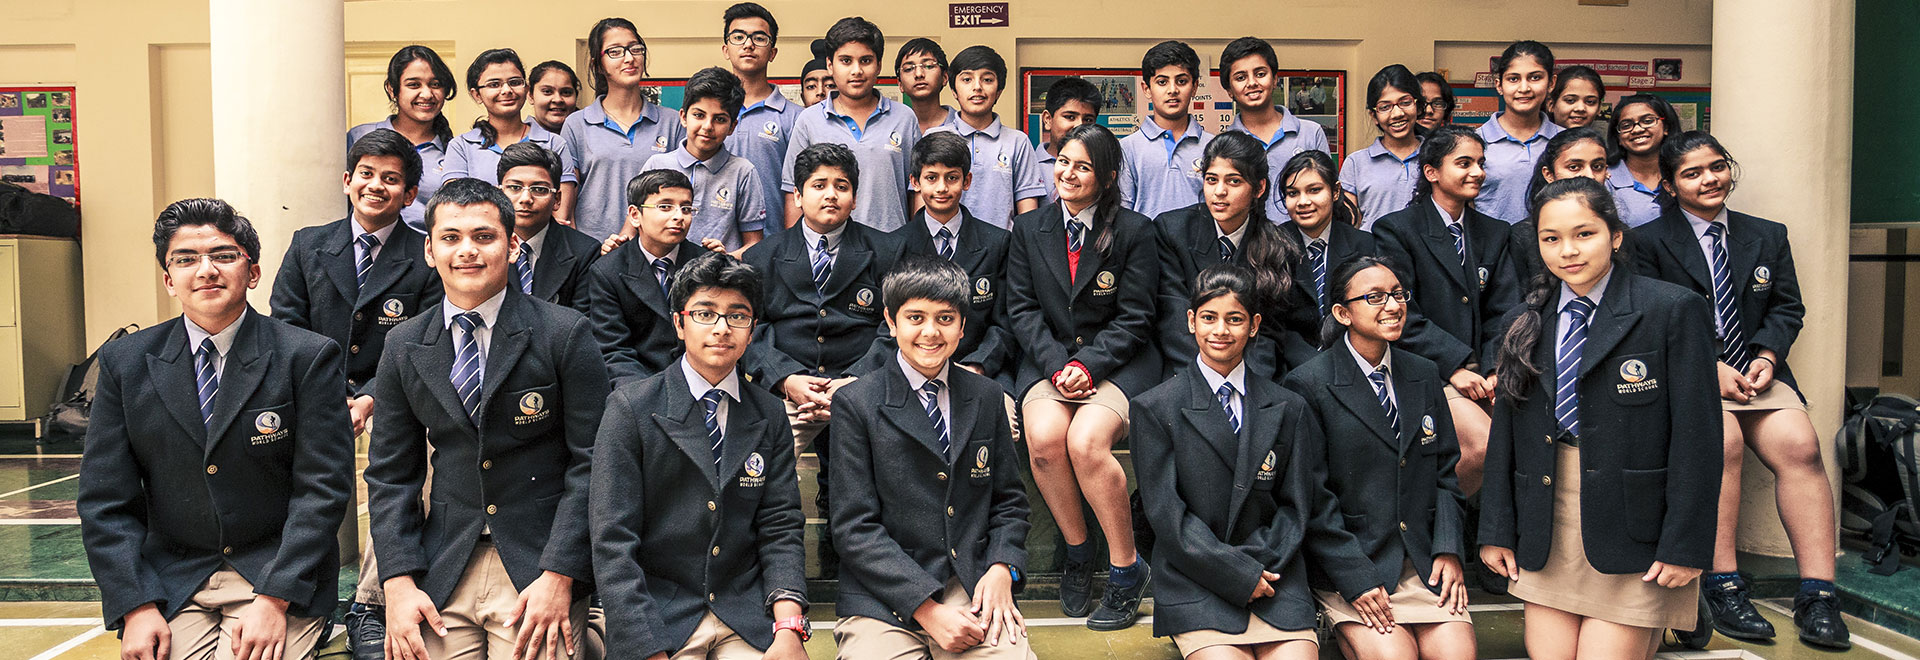 Pathways School Gurgaon - The Students